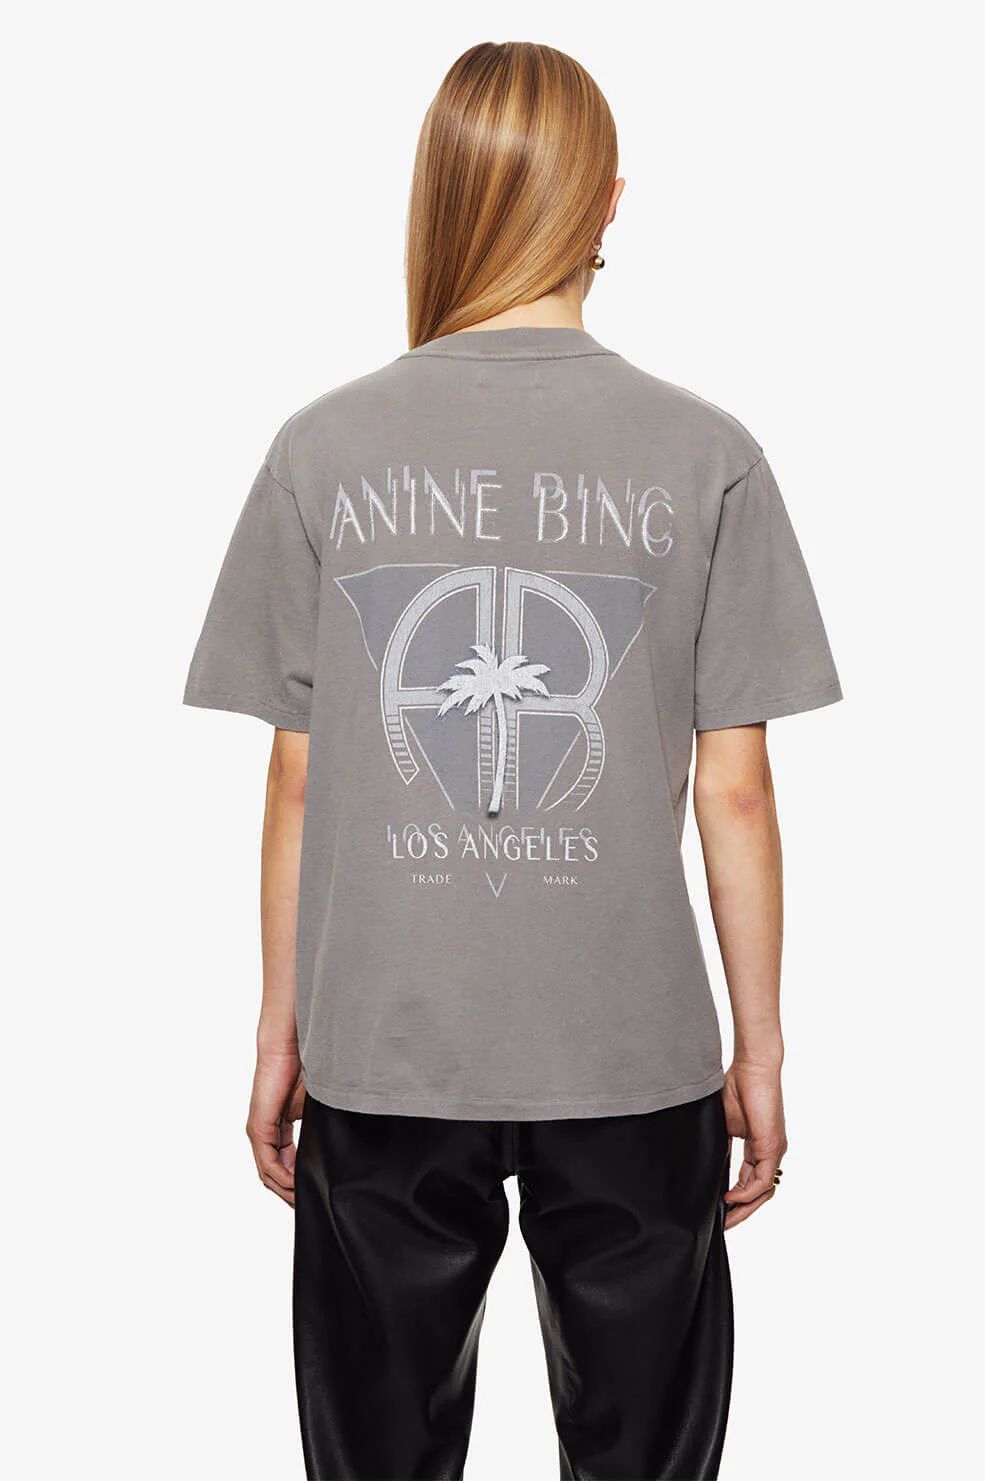 ANINE BING Ida Tee Palm in Washed Grey | Anine Bing